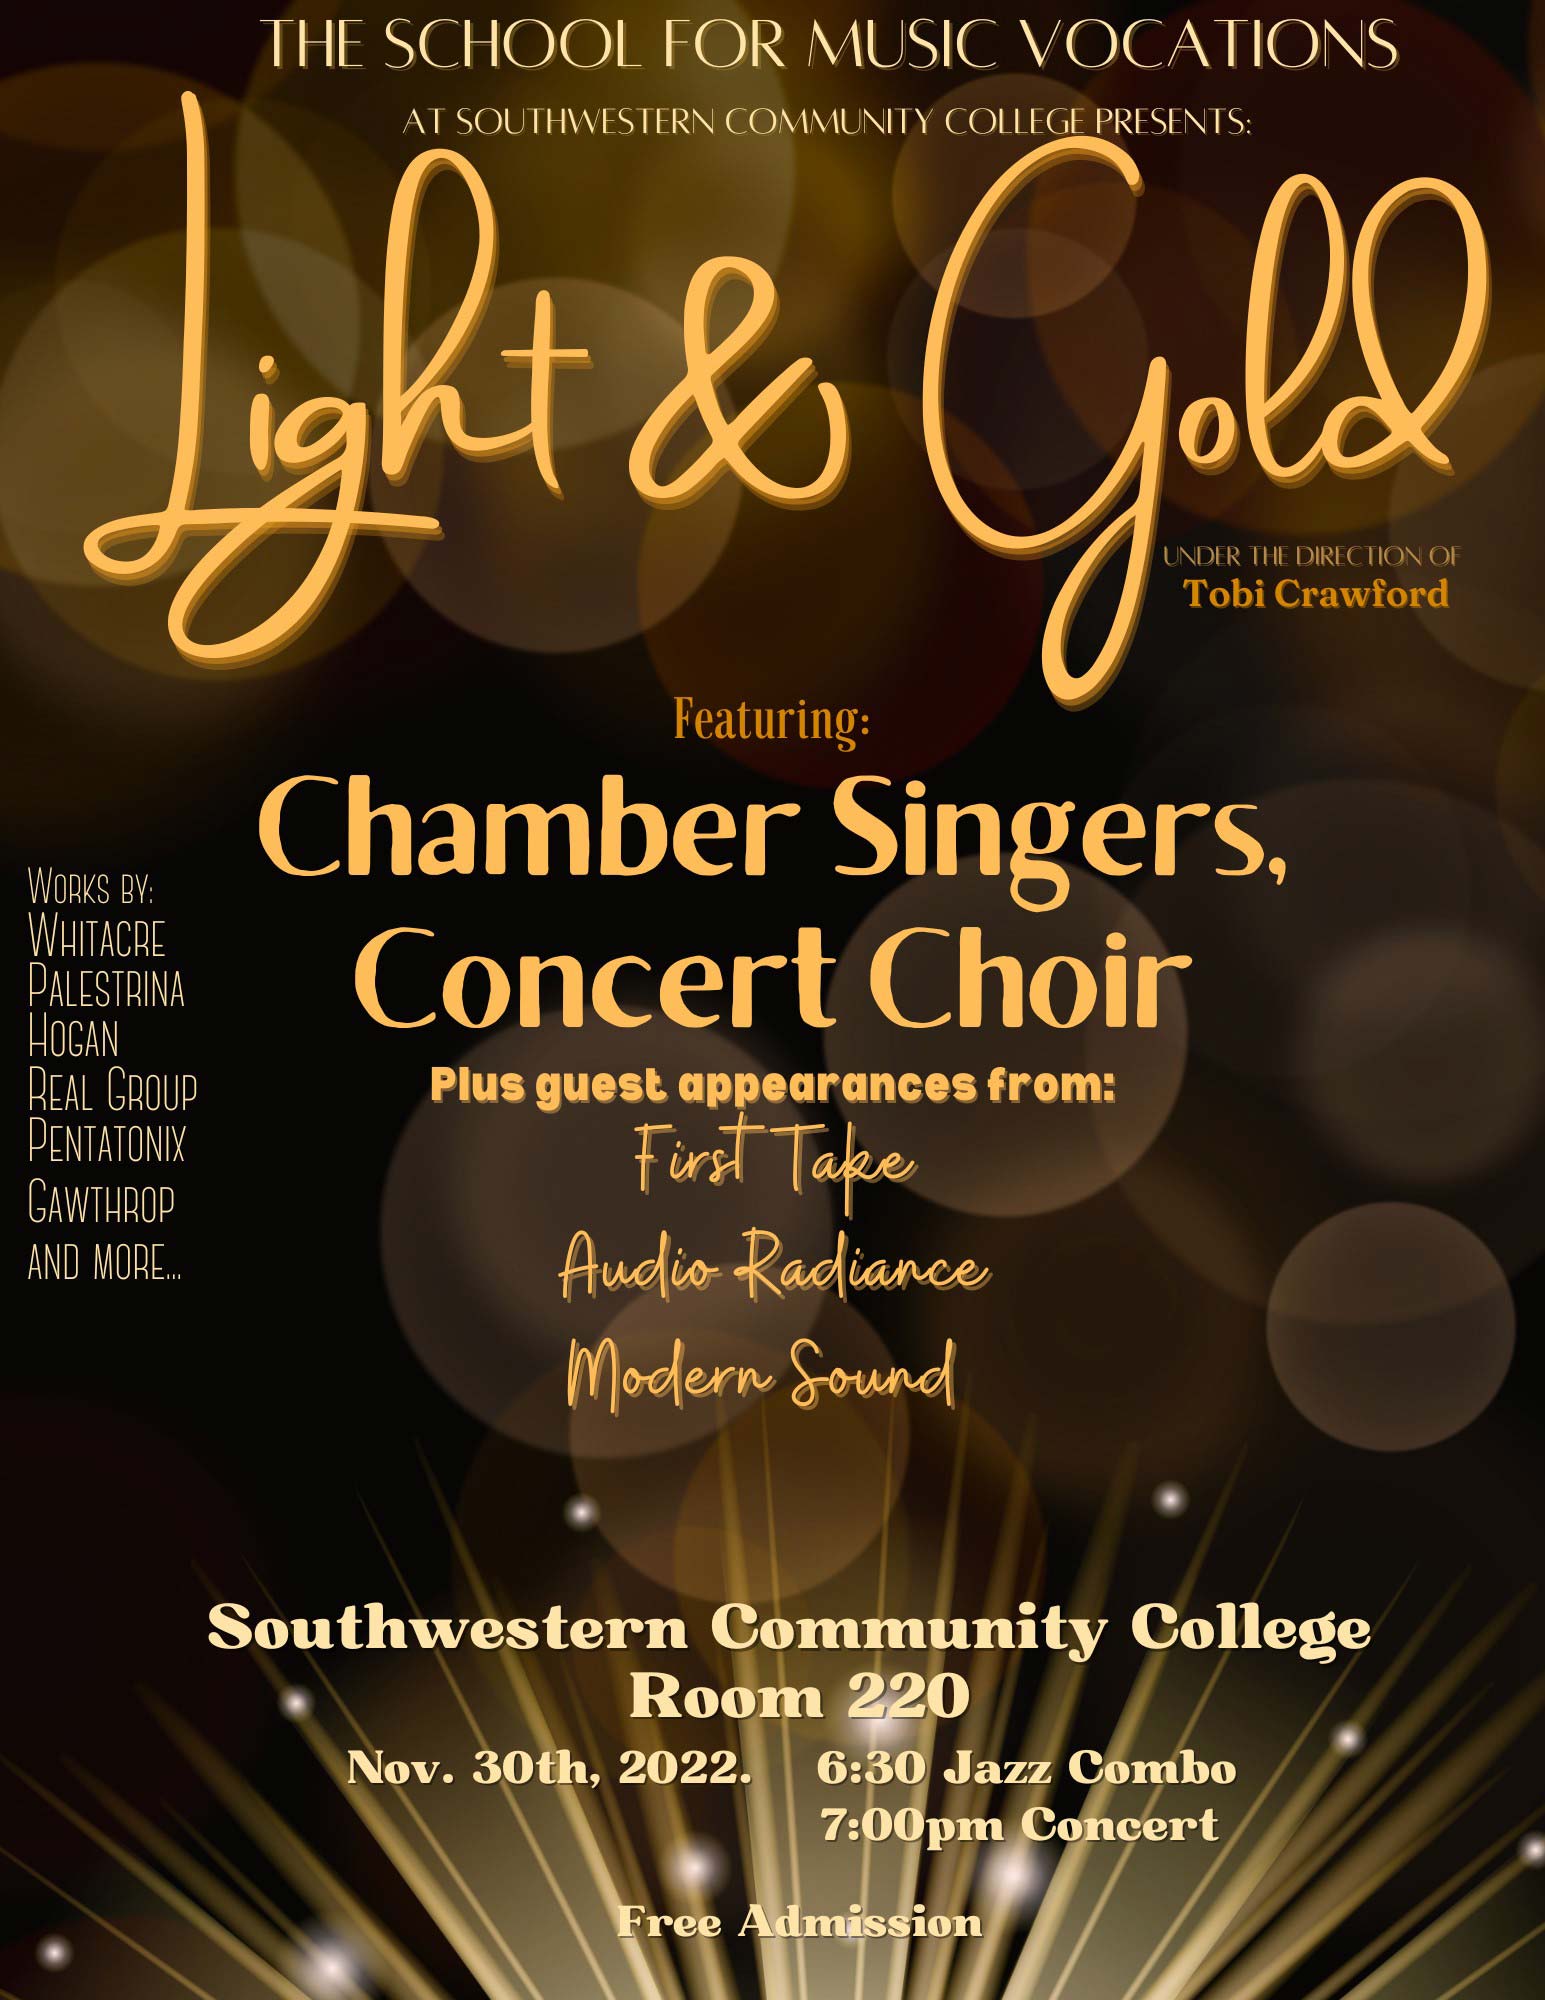 Light & Gold concert flyer featuring event details